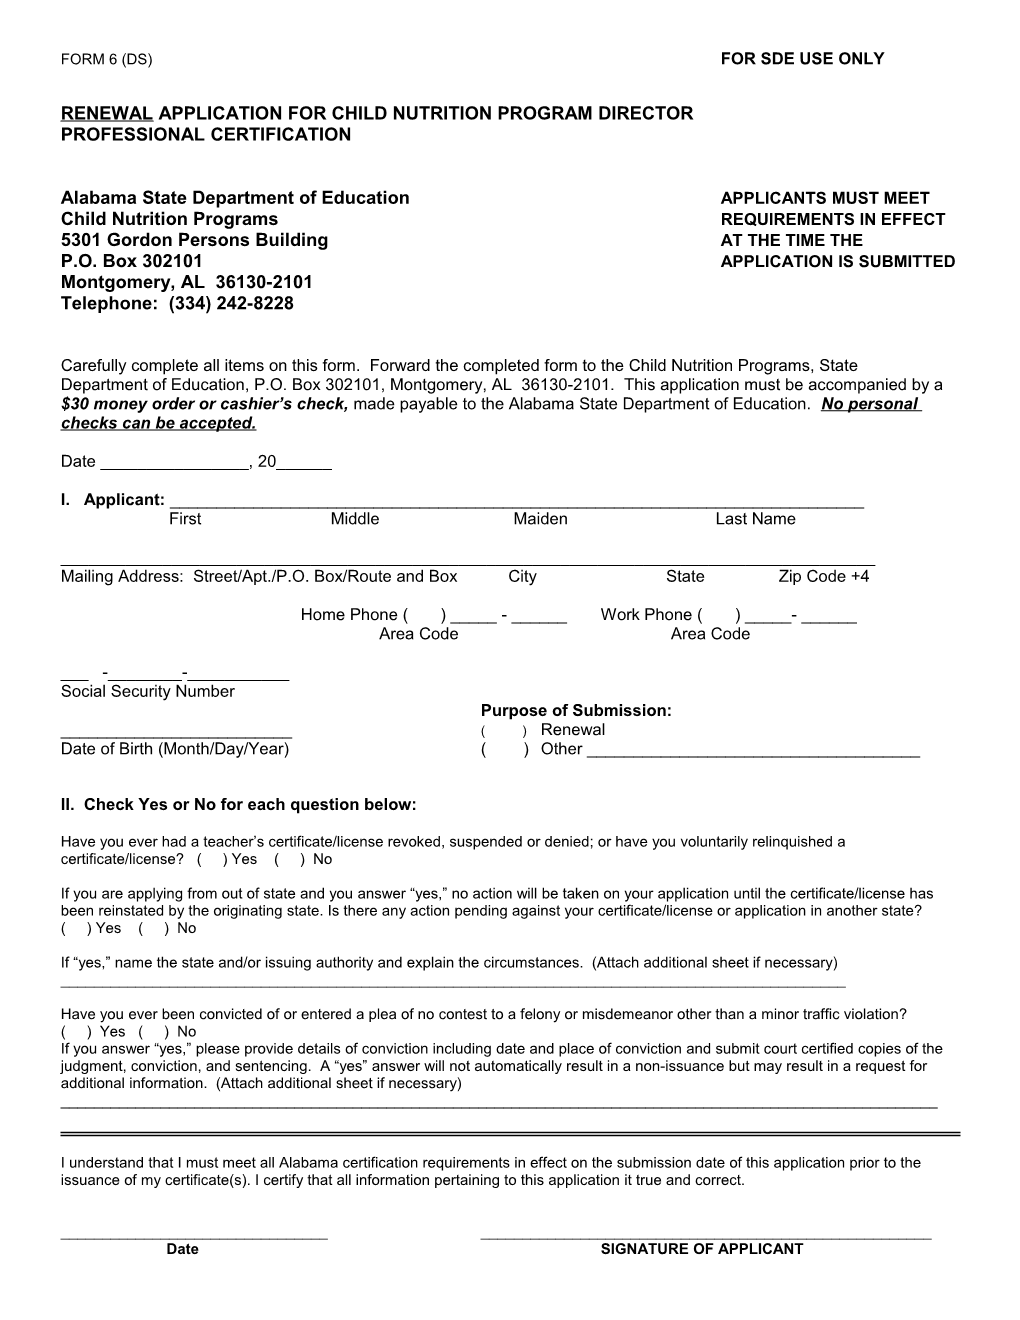 RENEWAL CNP Director Certification Application